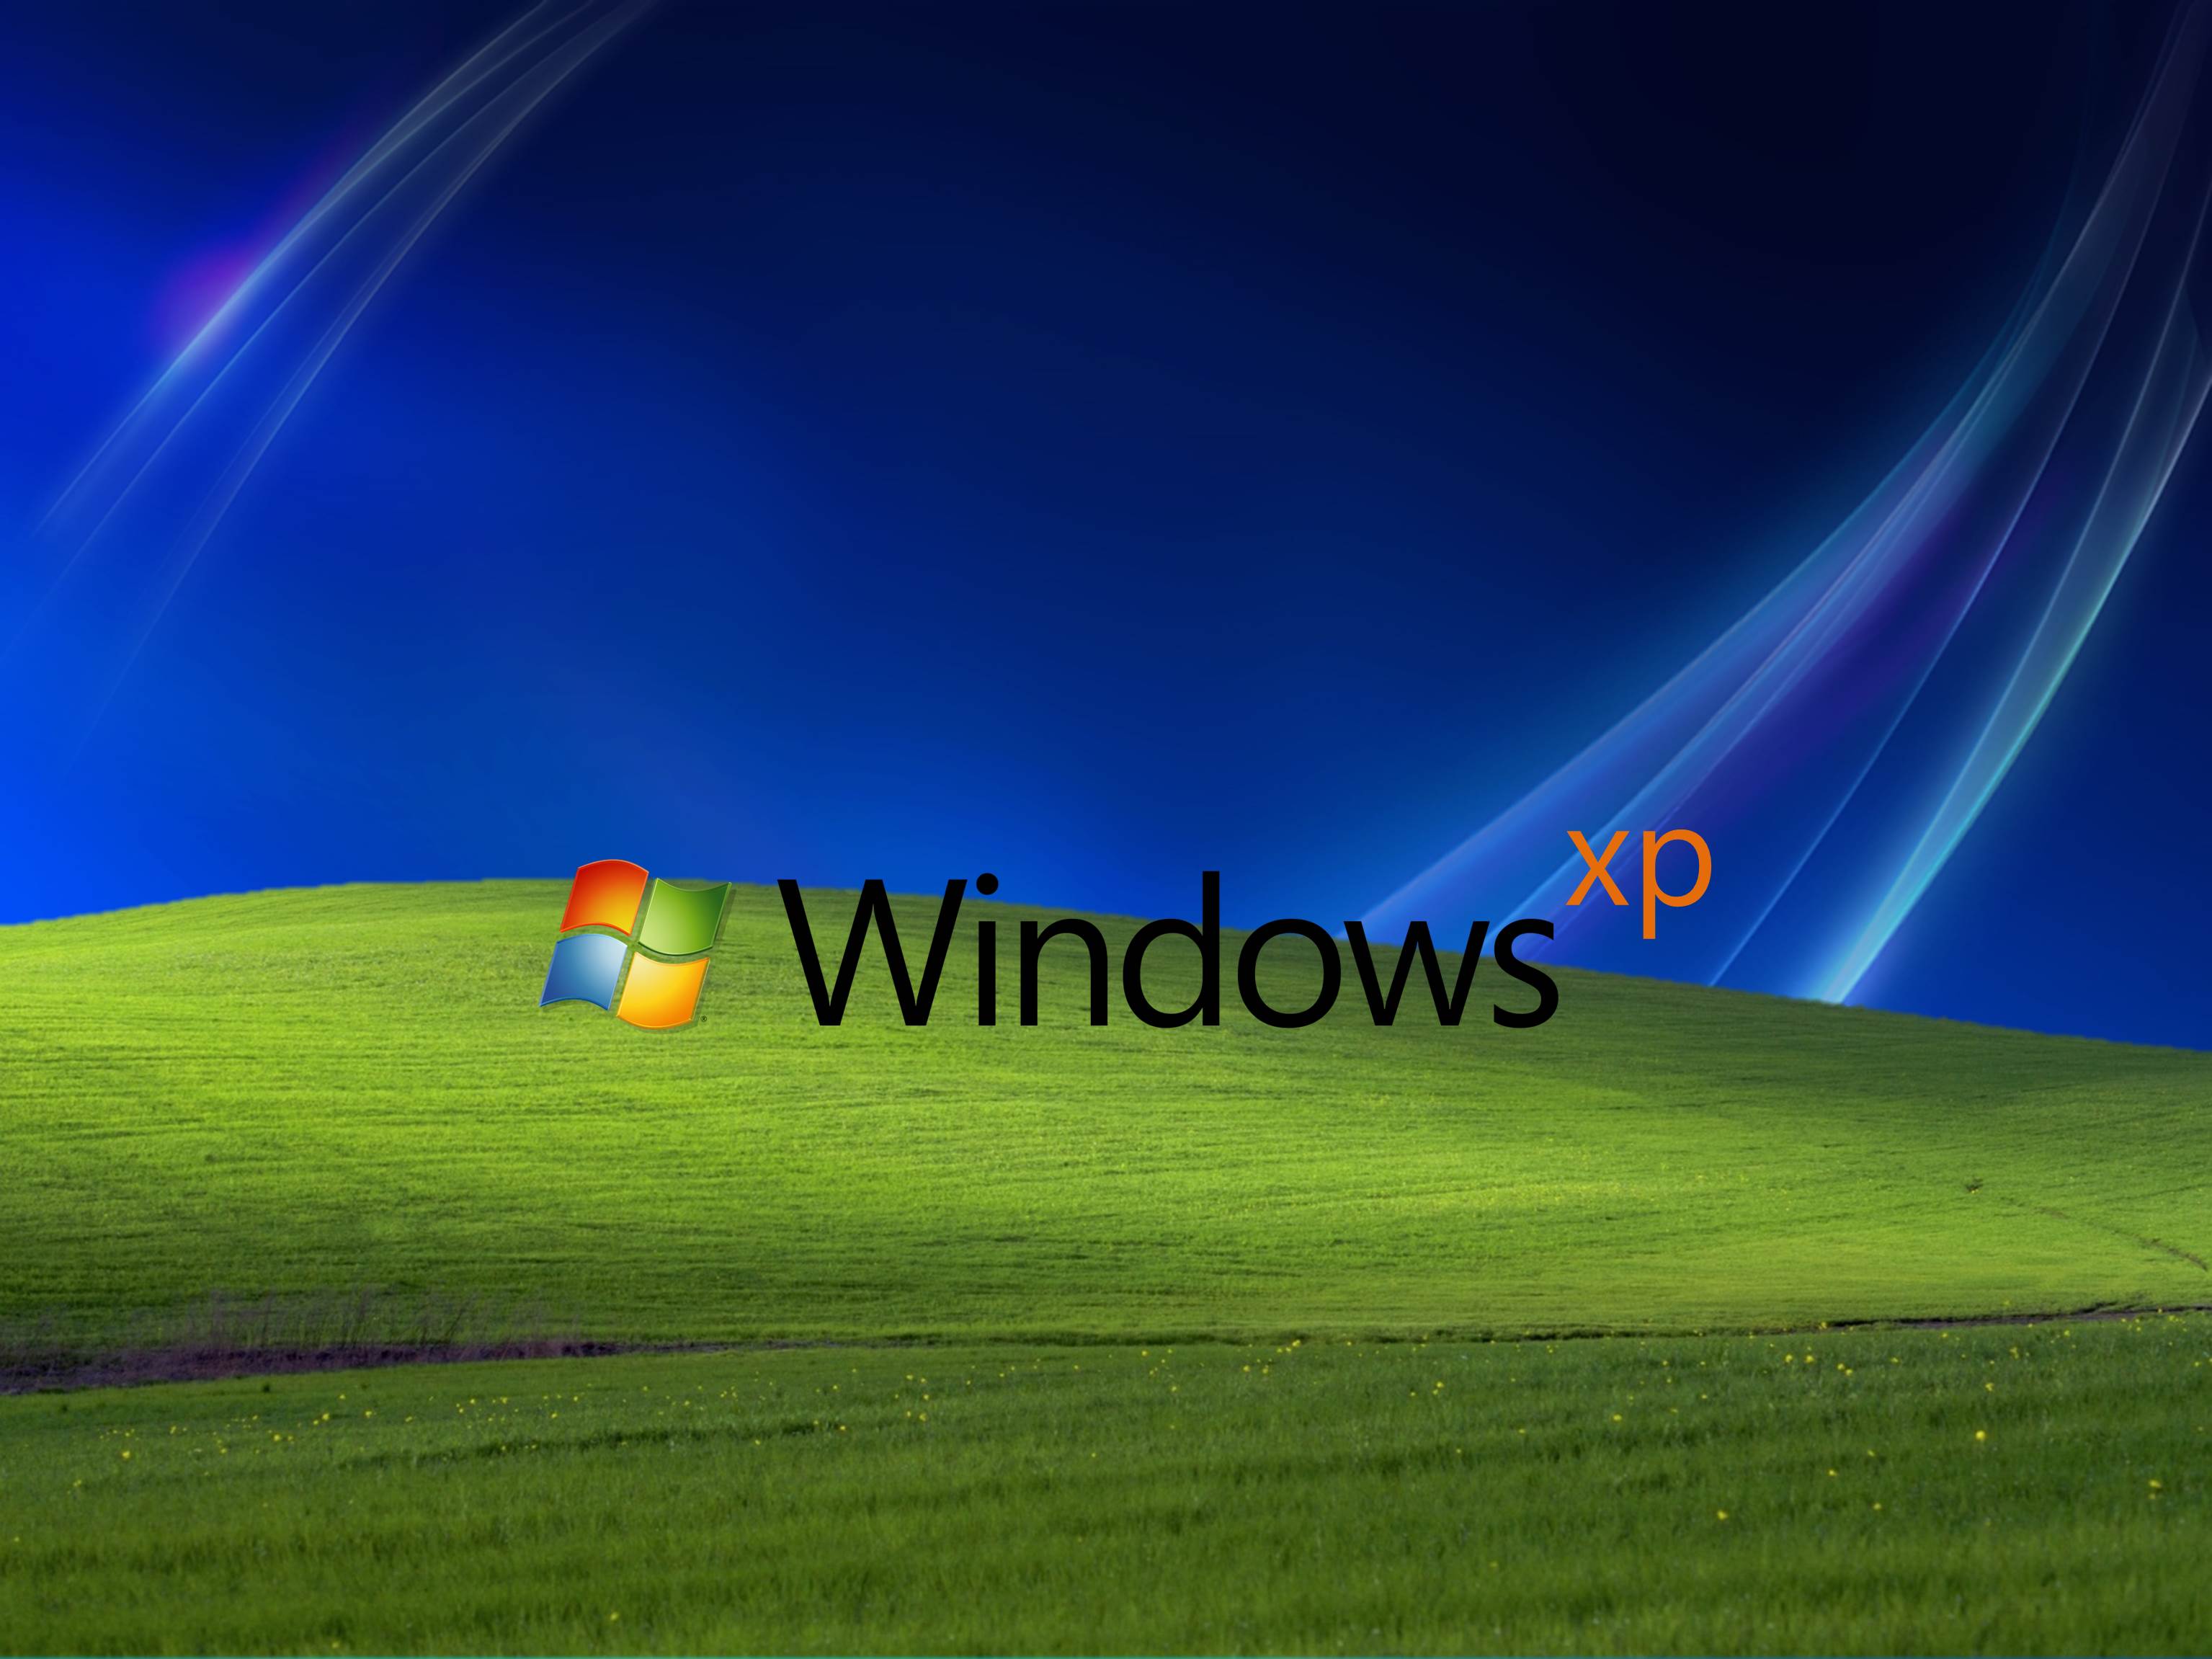 [50+] Old Windows XP Wallpapers - WallpaperSafari